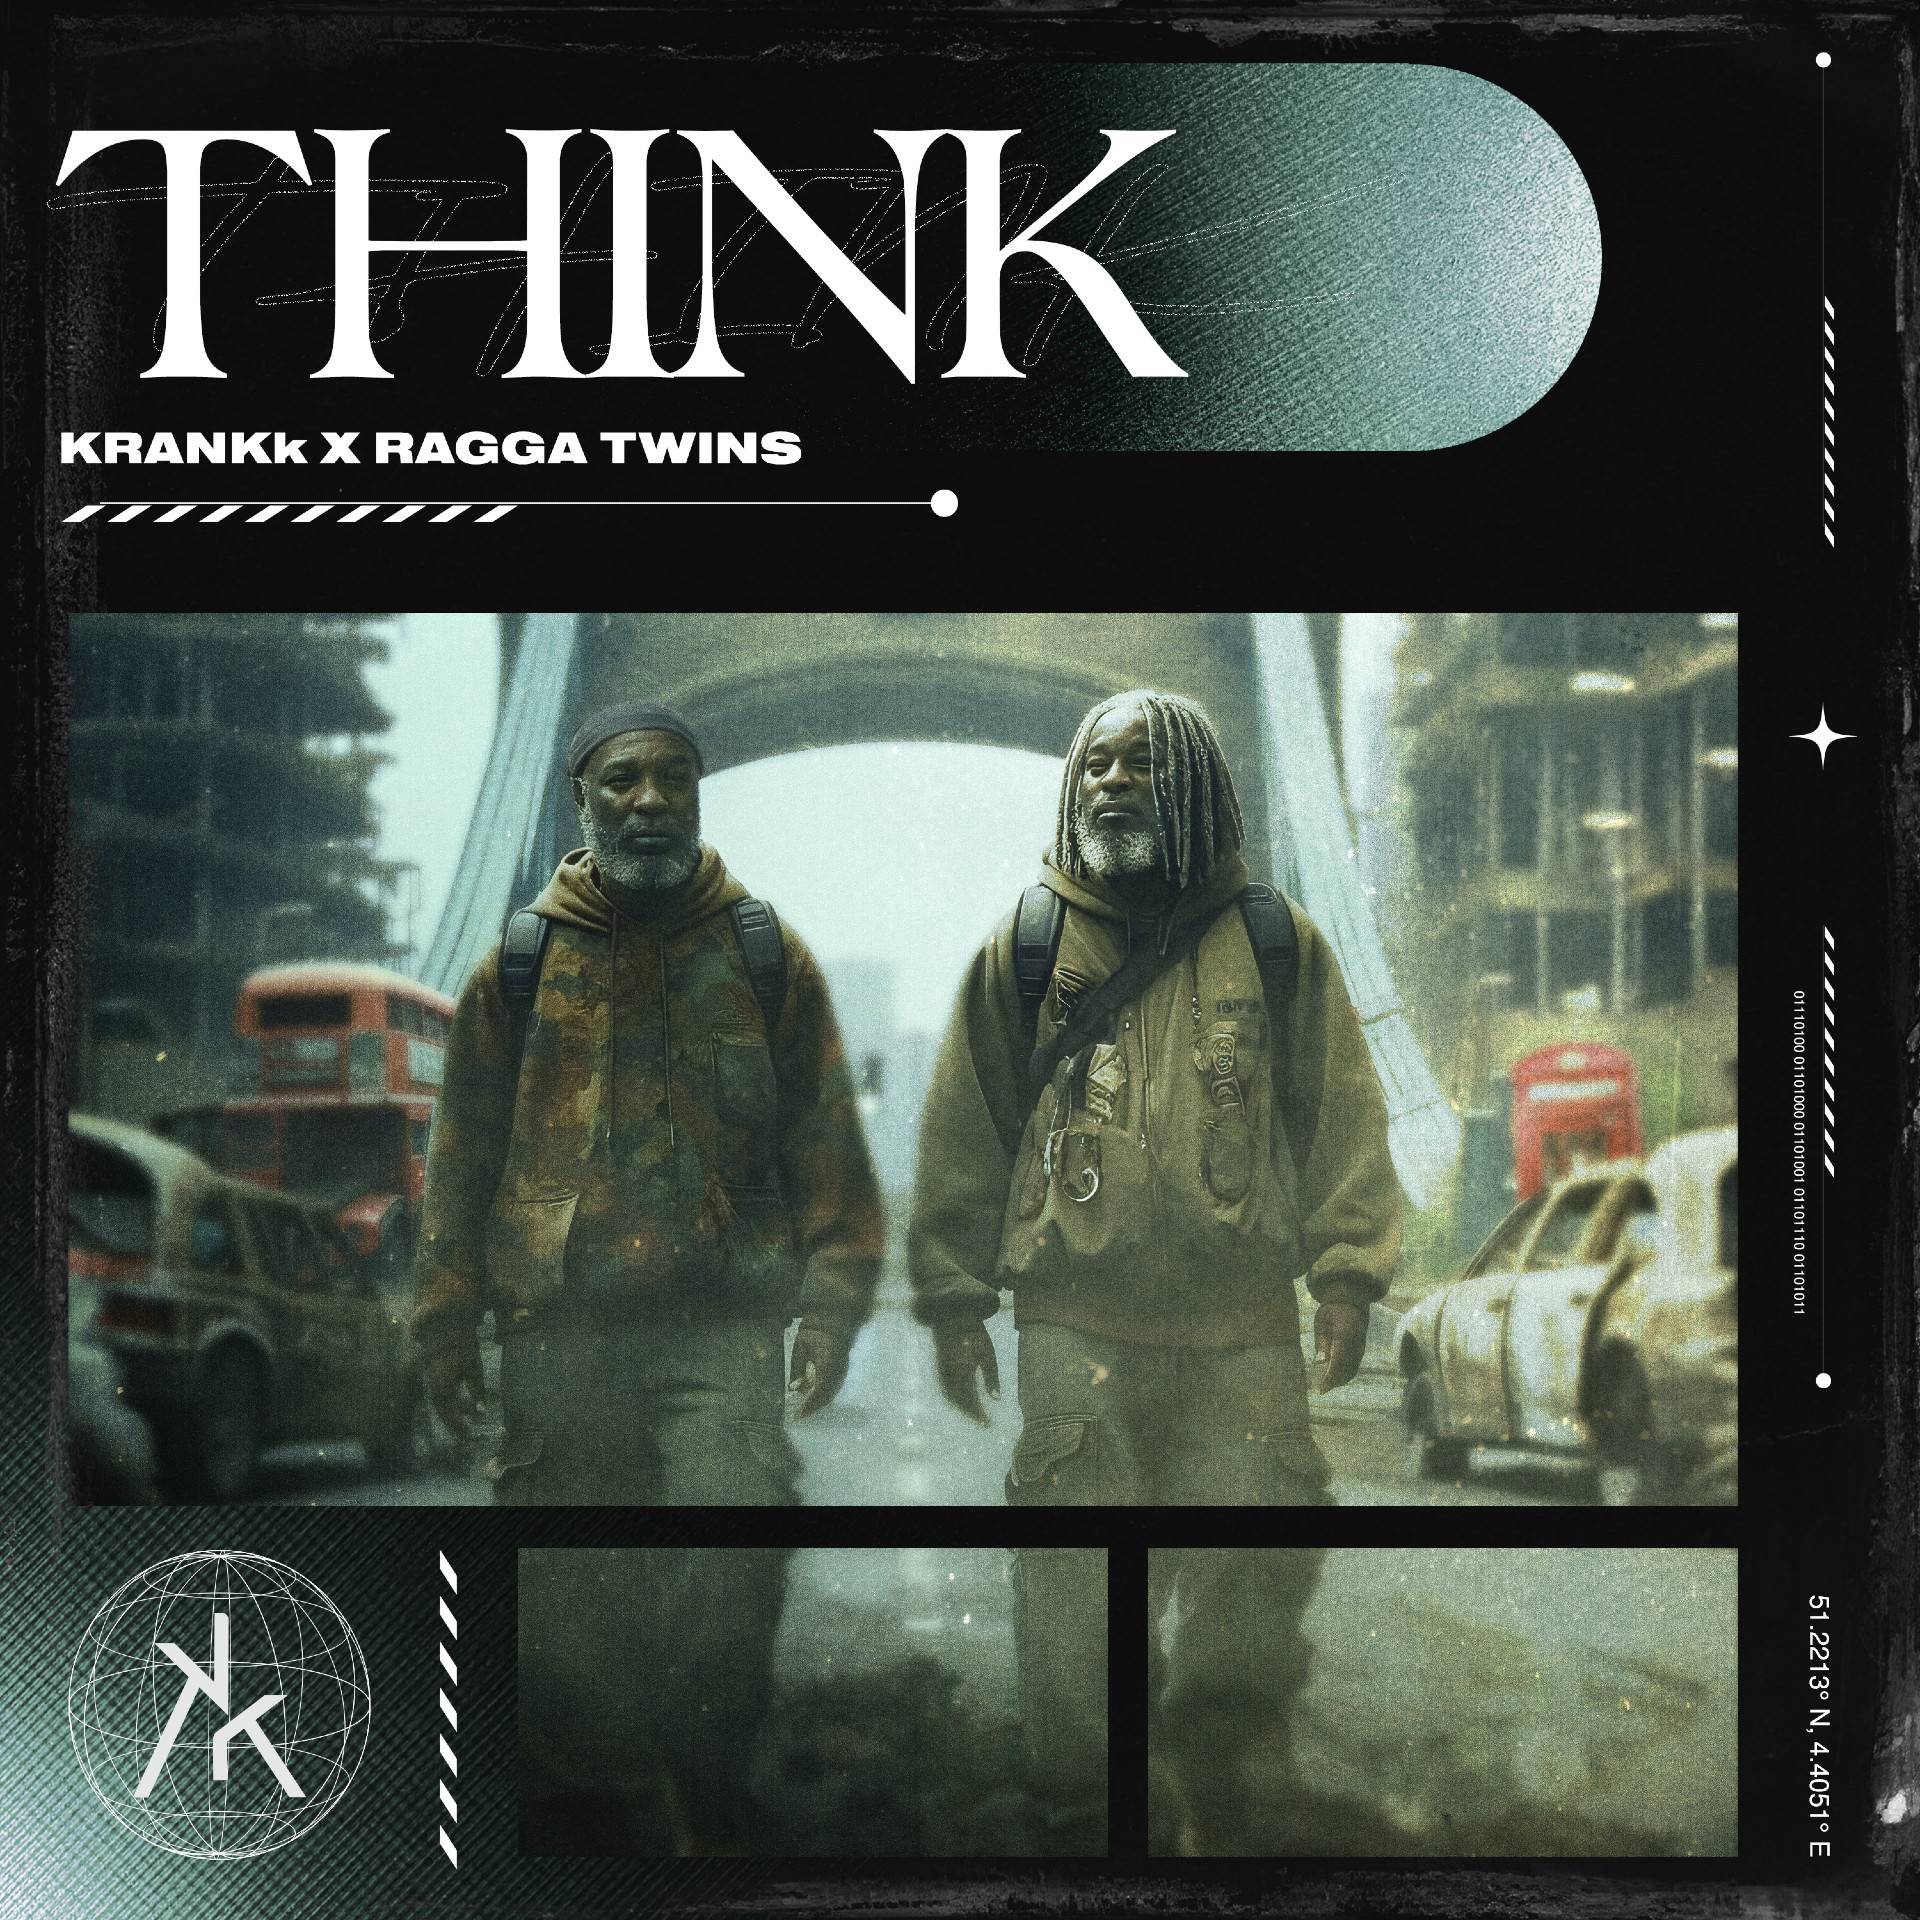 KRANKk x Ragga Twins “THINK” single artwork